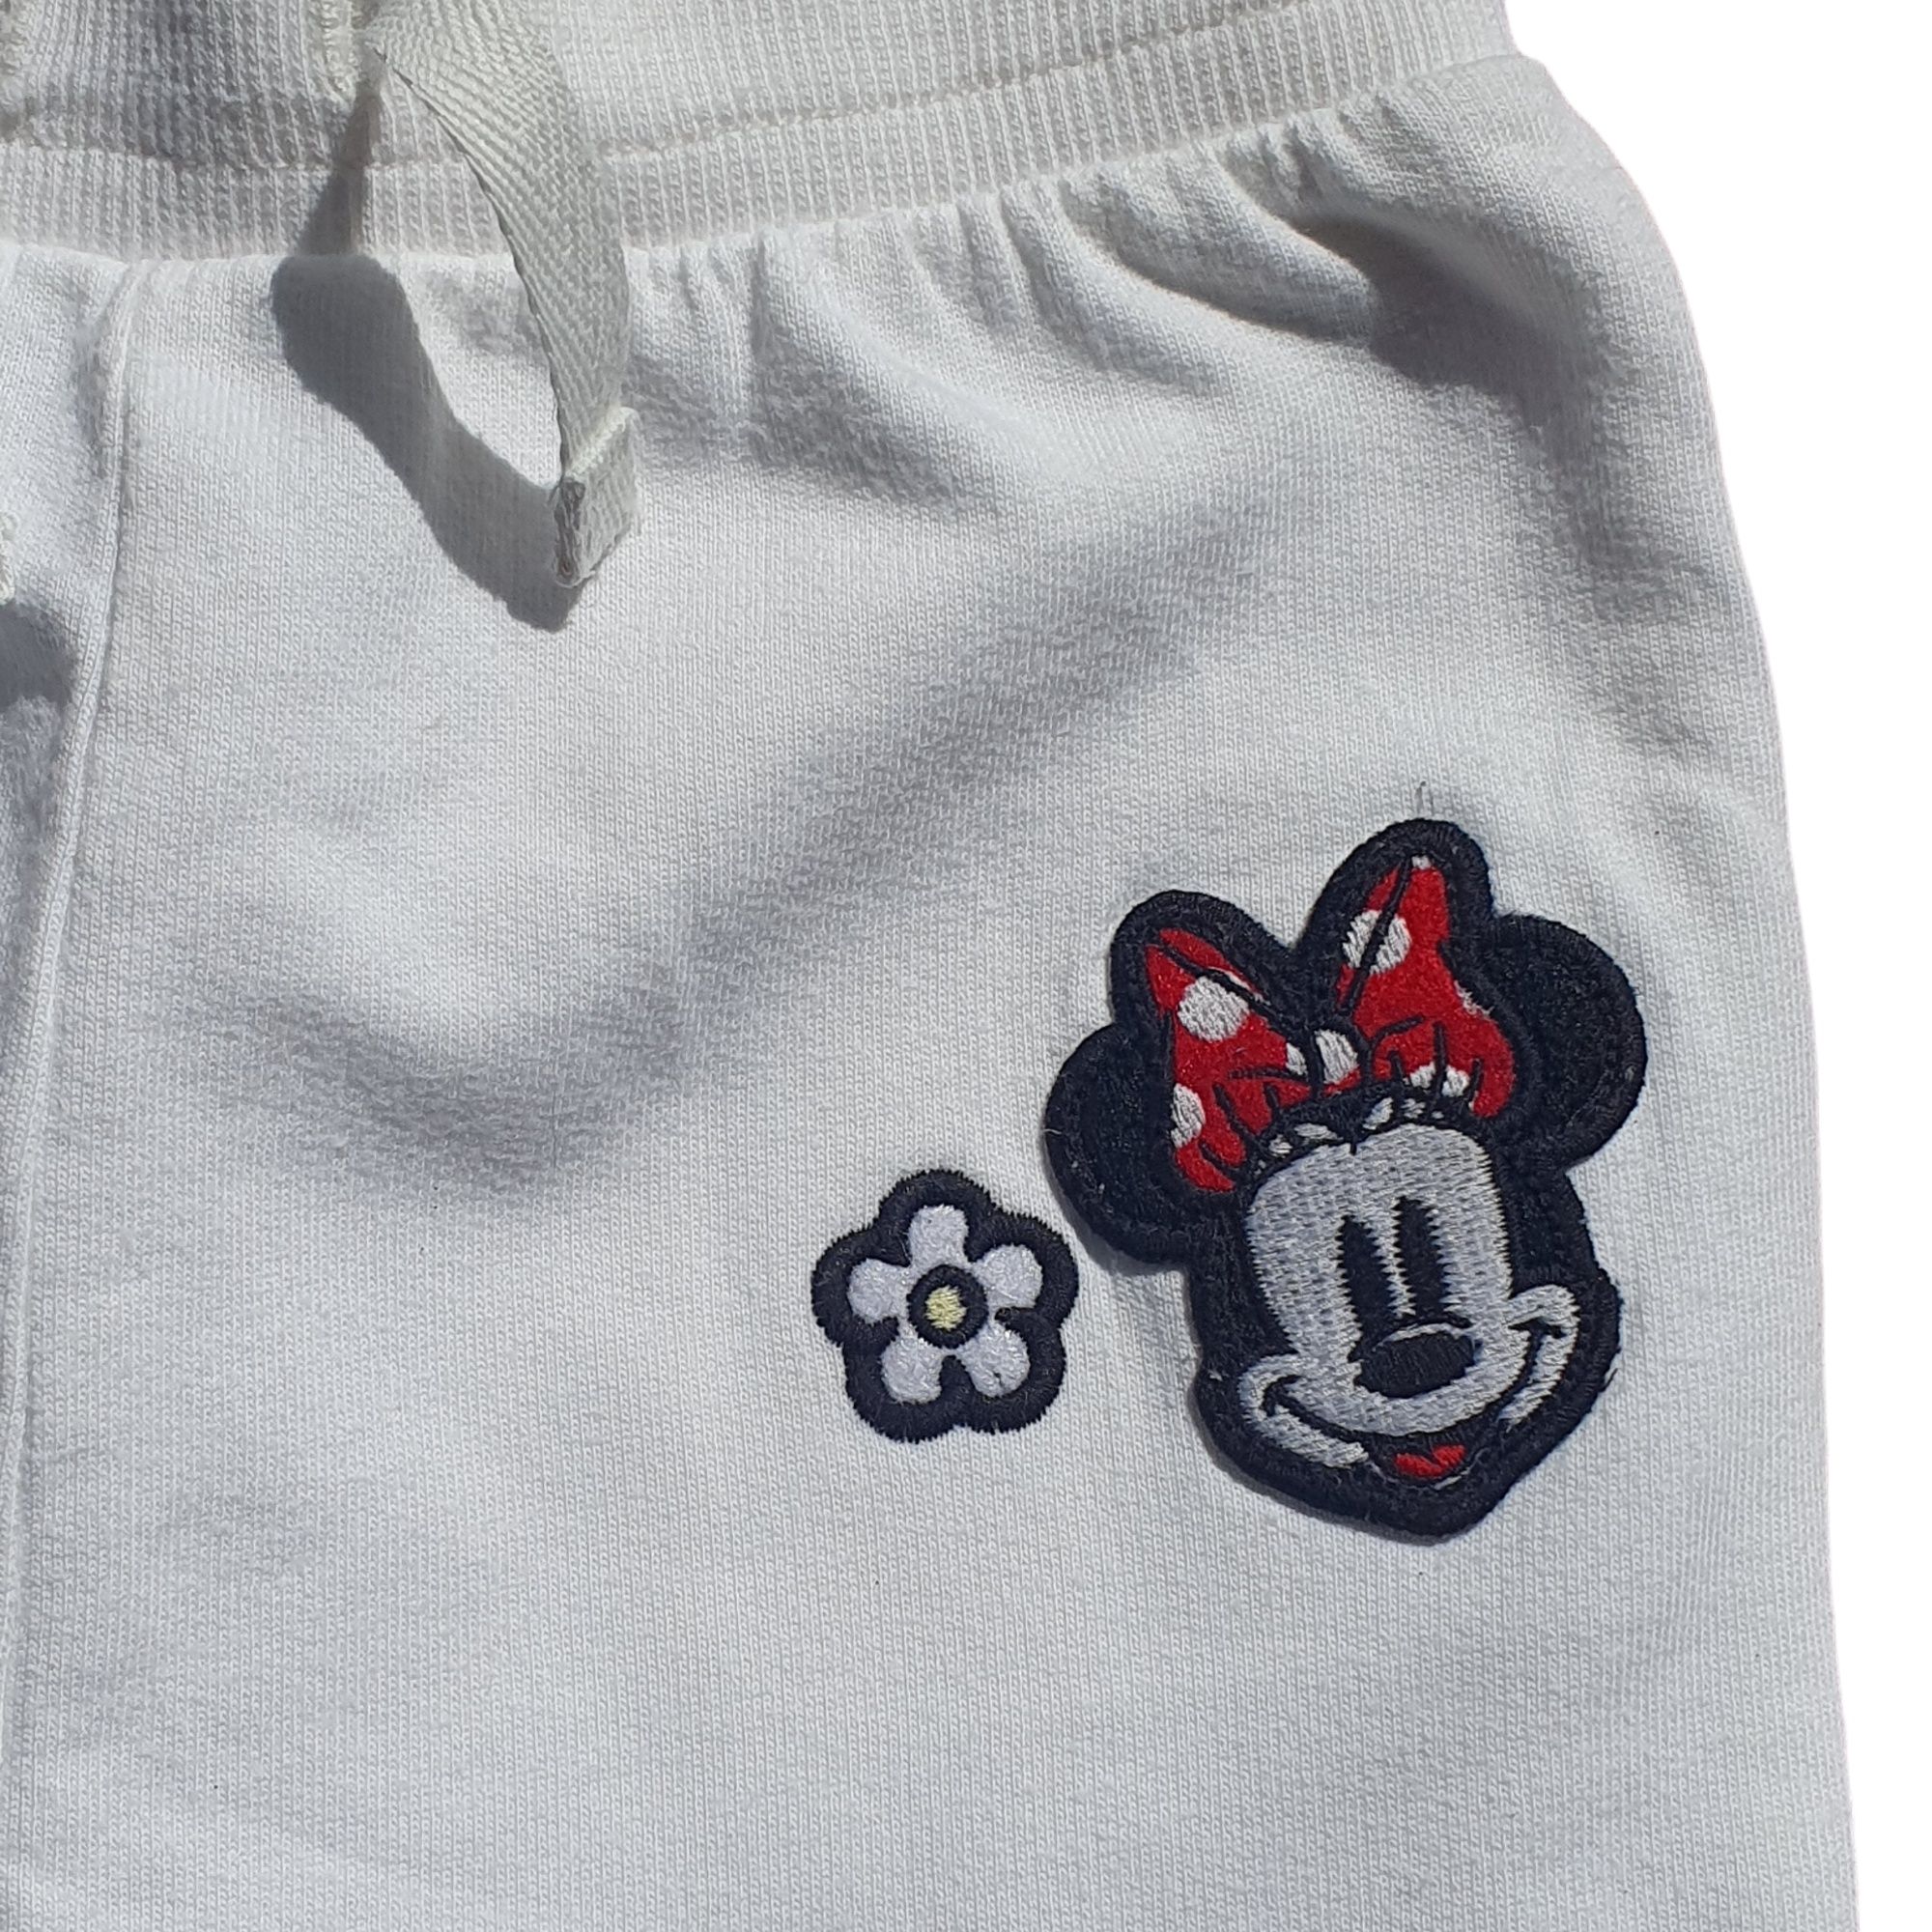 Pantaloni de trening Next Disney Baby, 12-18 luni, 80-86, cu Minnie